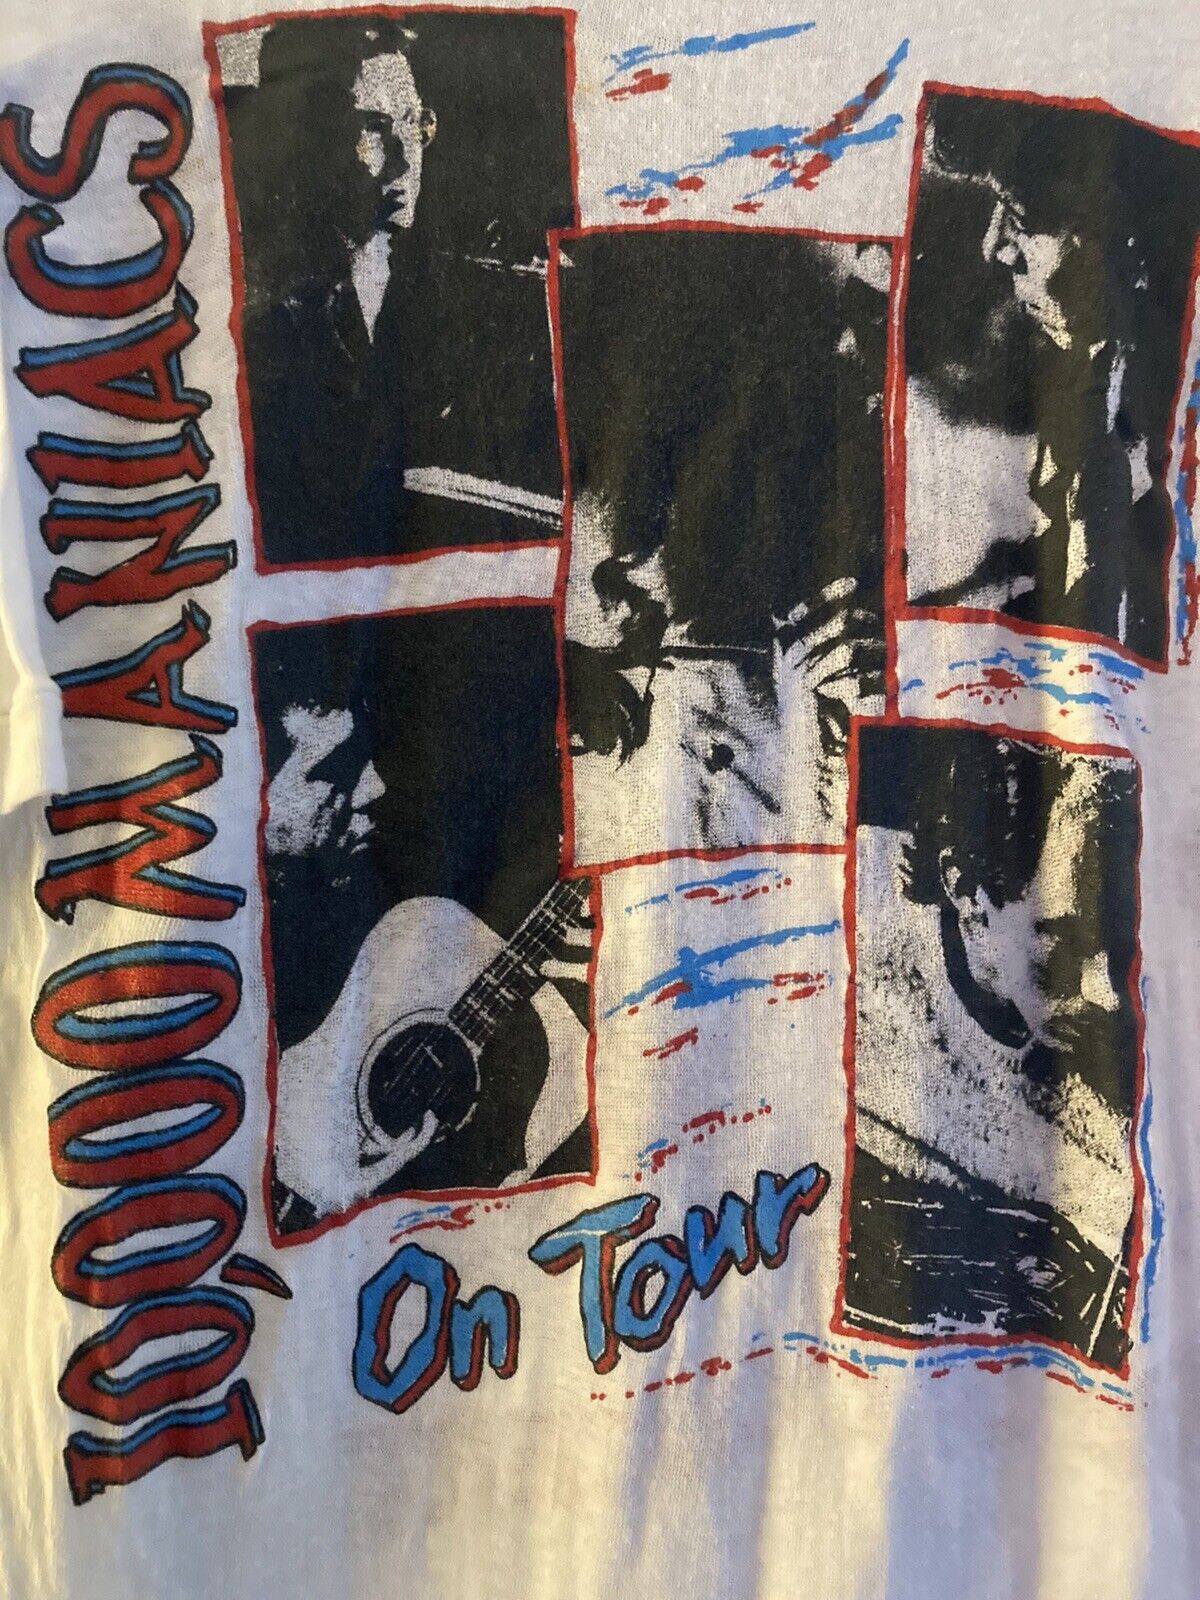 Vintage 10,000 Maniacs Band Tee T-shirt Size L World Tour cure 80s Rock Punk